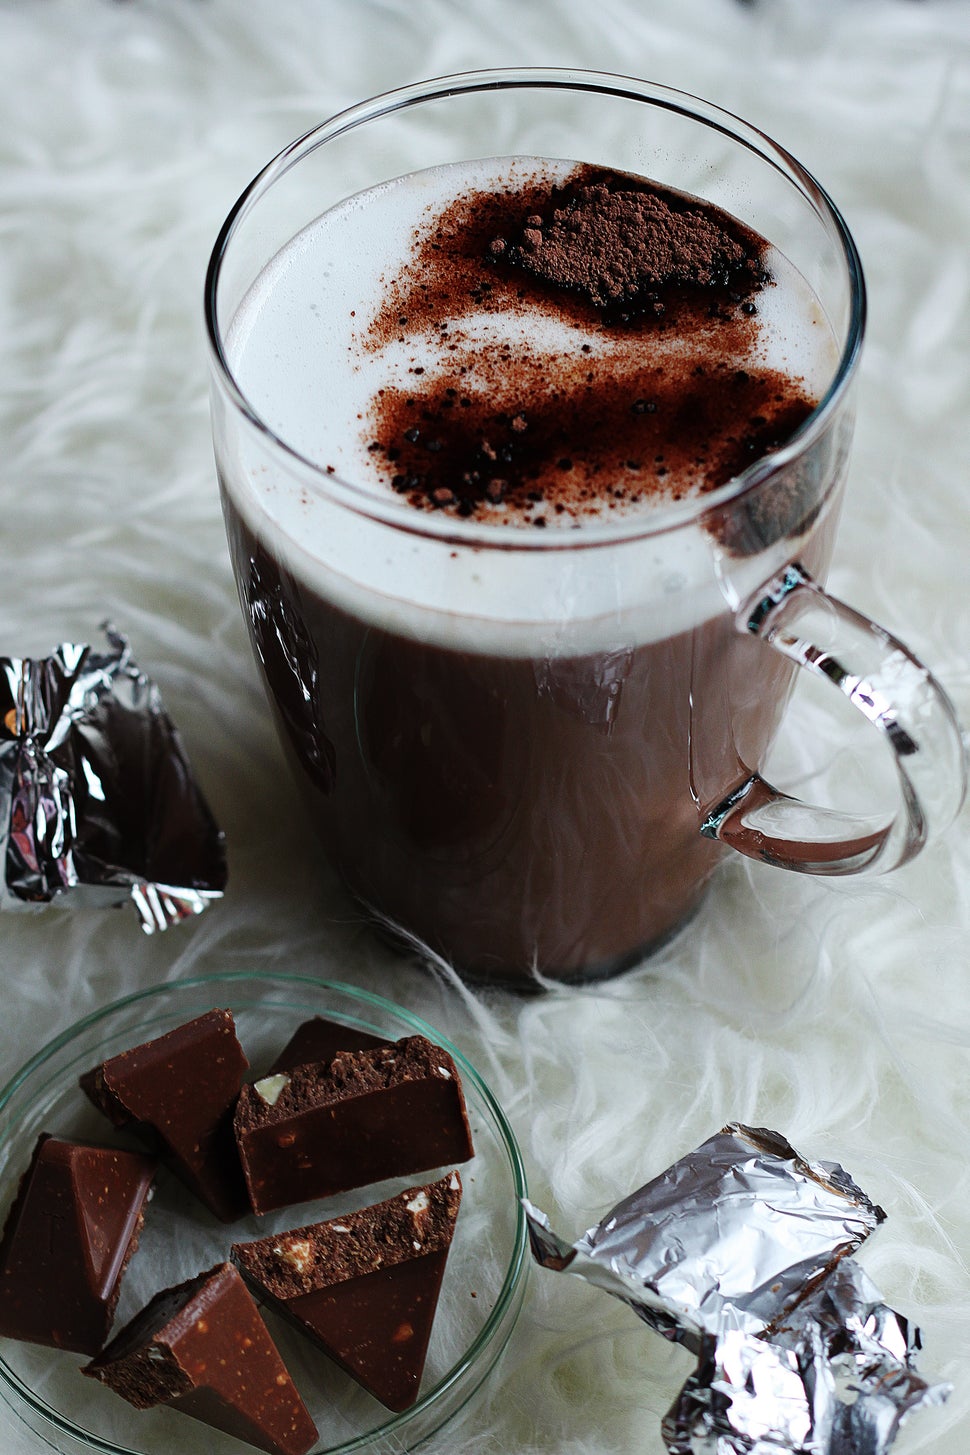 https://www.sweetfountains.com/wp-content/uploads/2022/02/hot-chocolate-dark-cocoa_970x.jpg